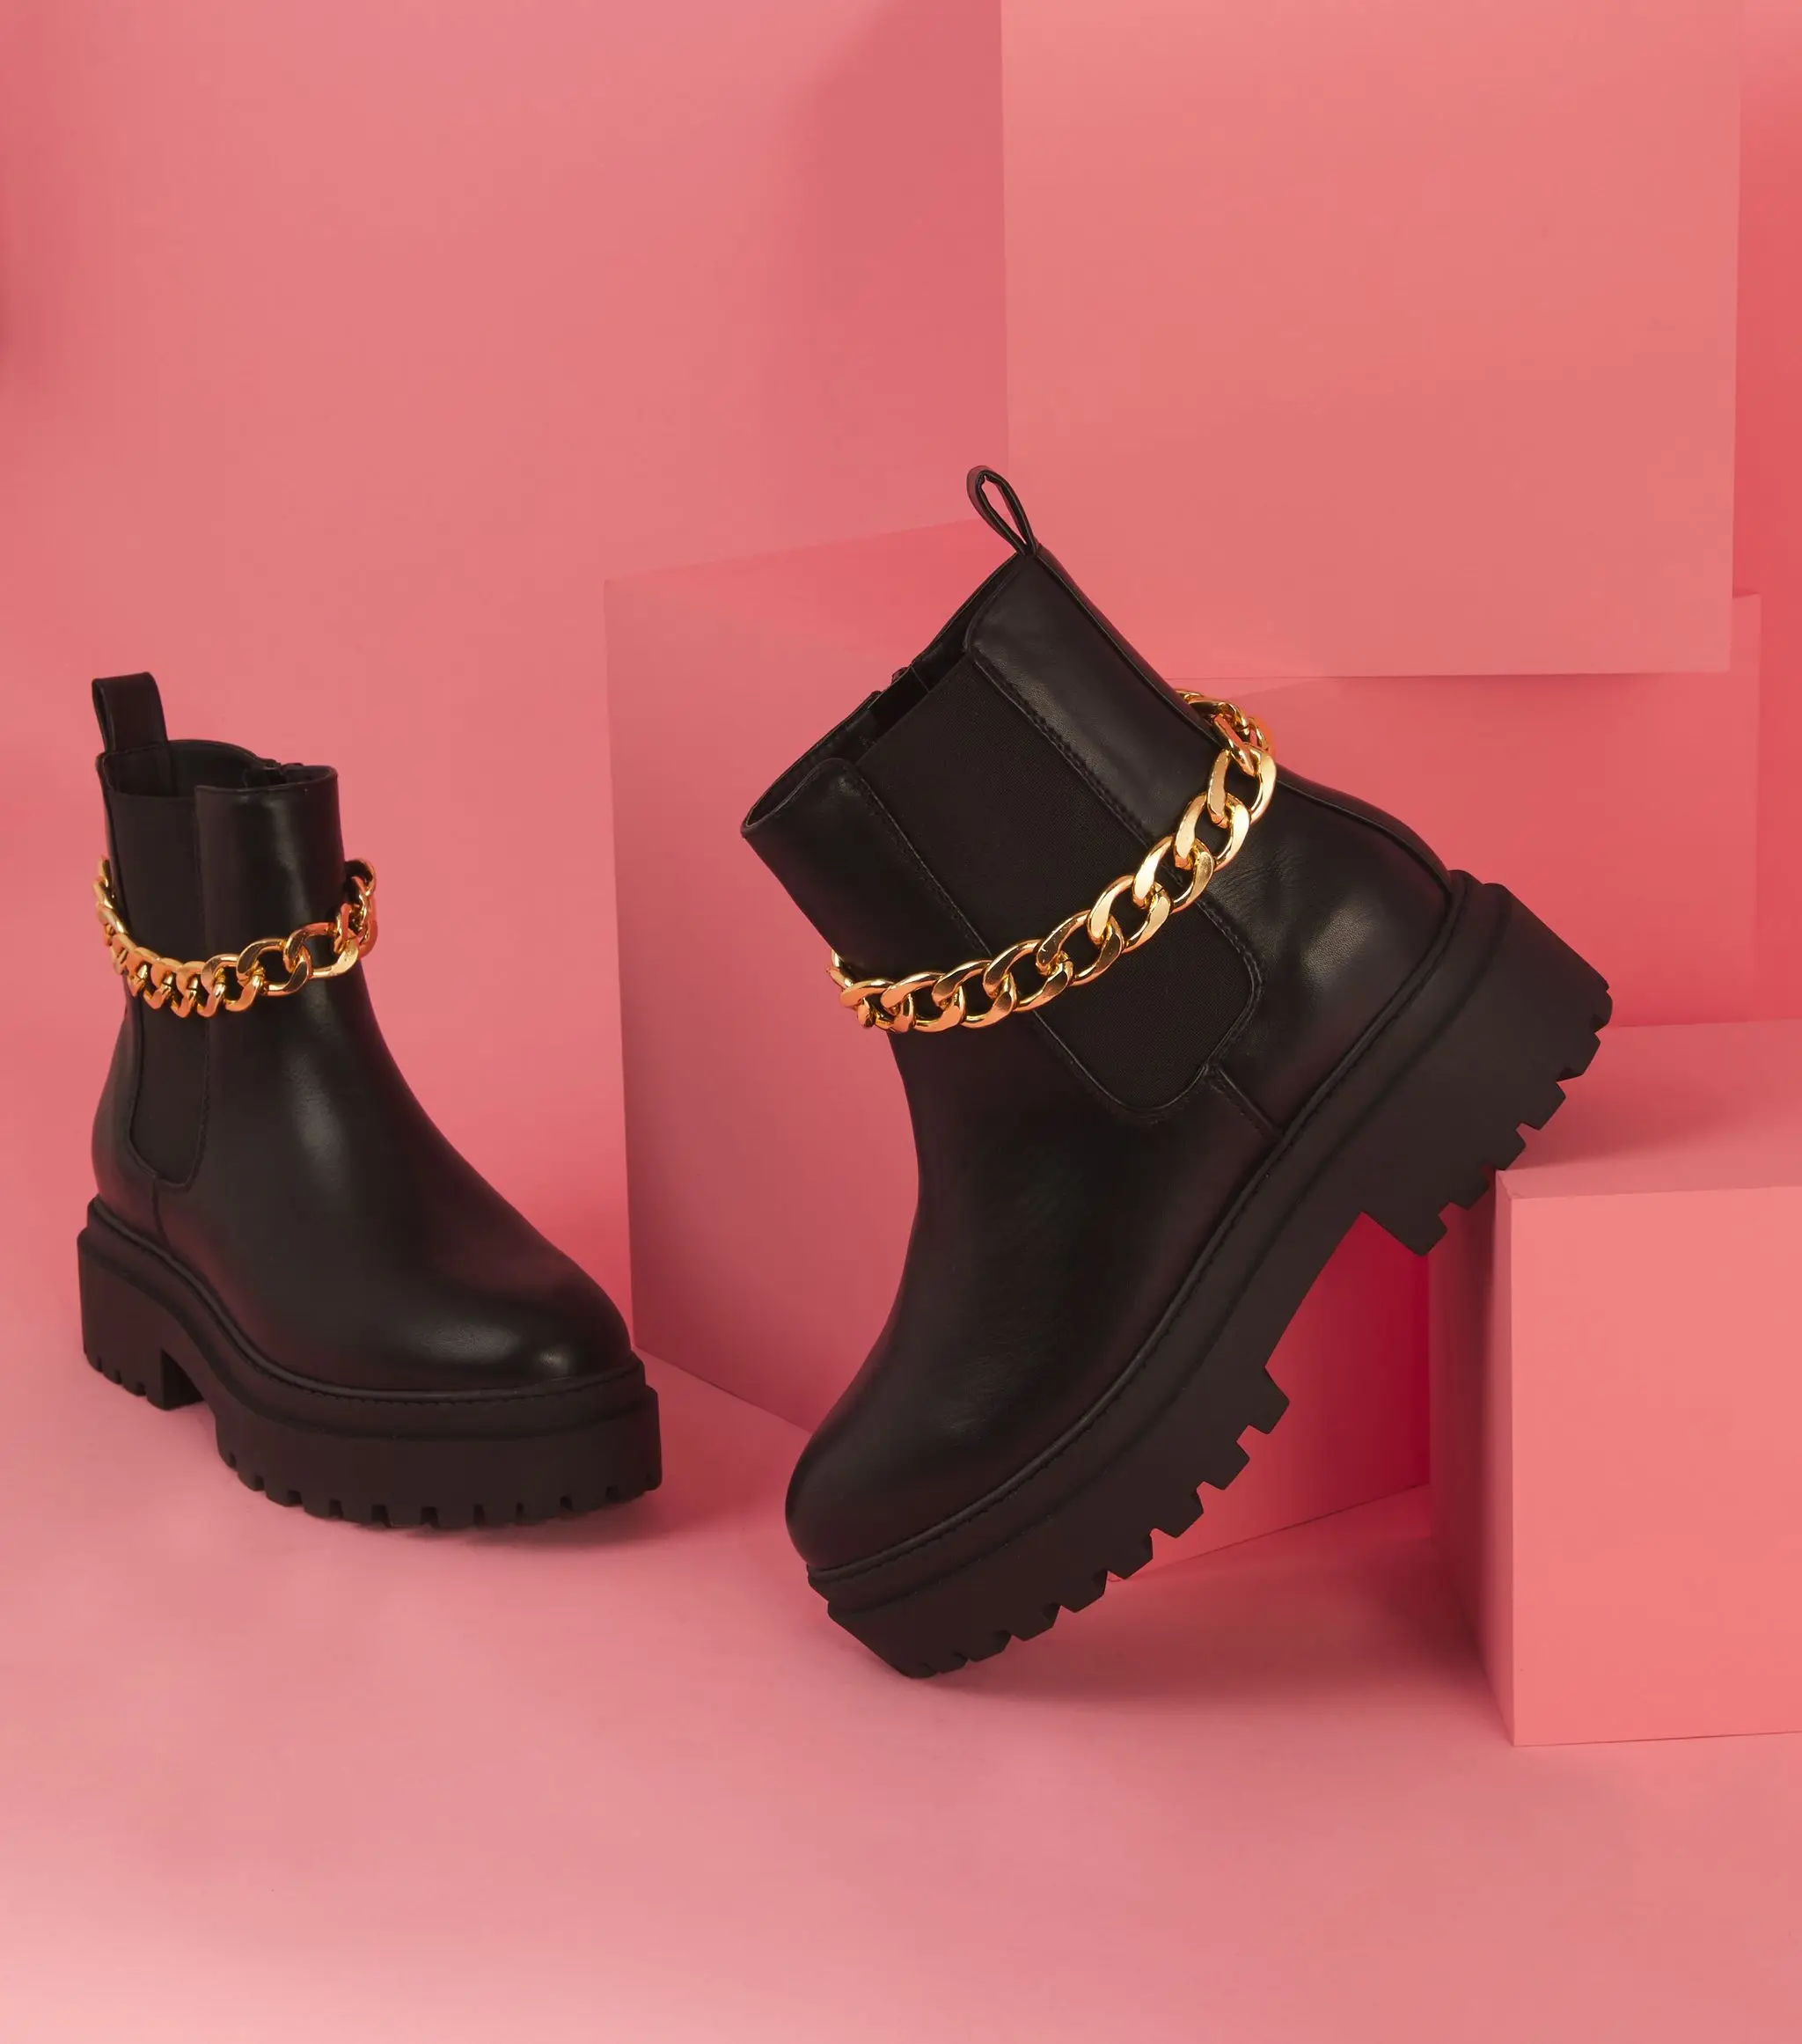 Metal chain Pantshoes Black PU Elastic Slip-On Boots Women Ladies Ankle Boots